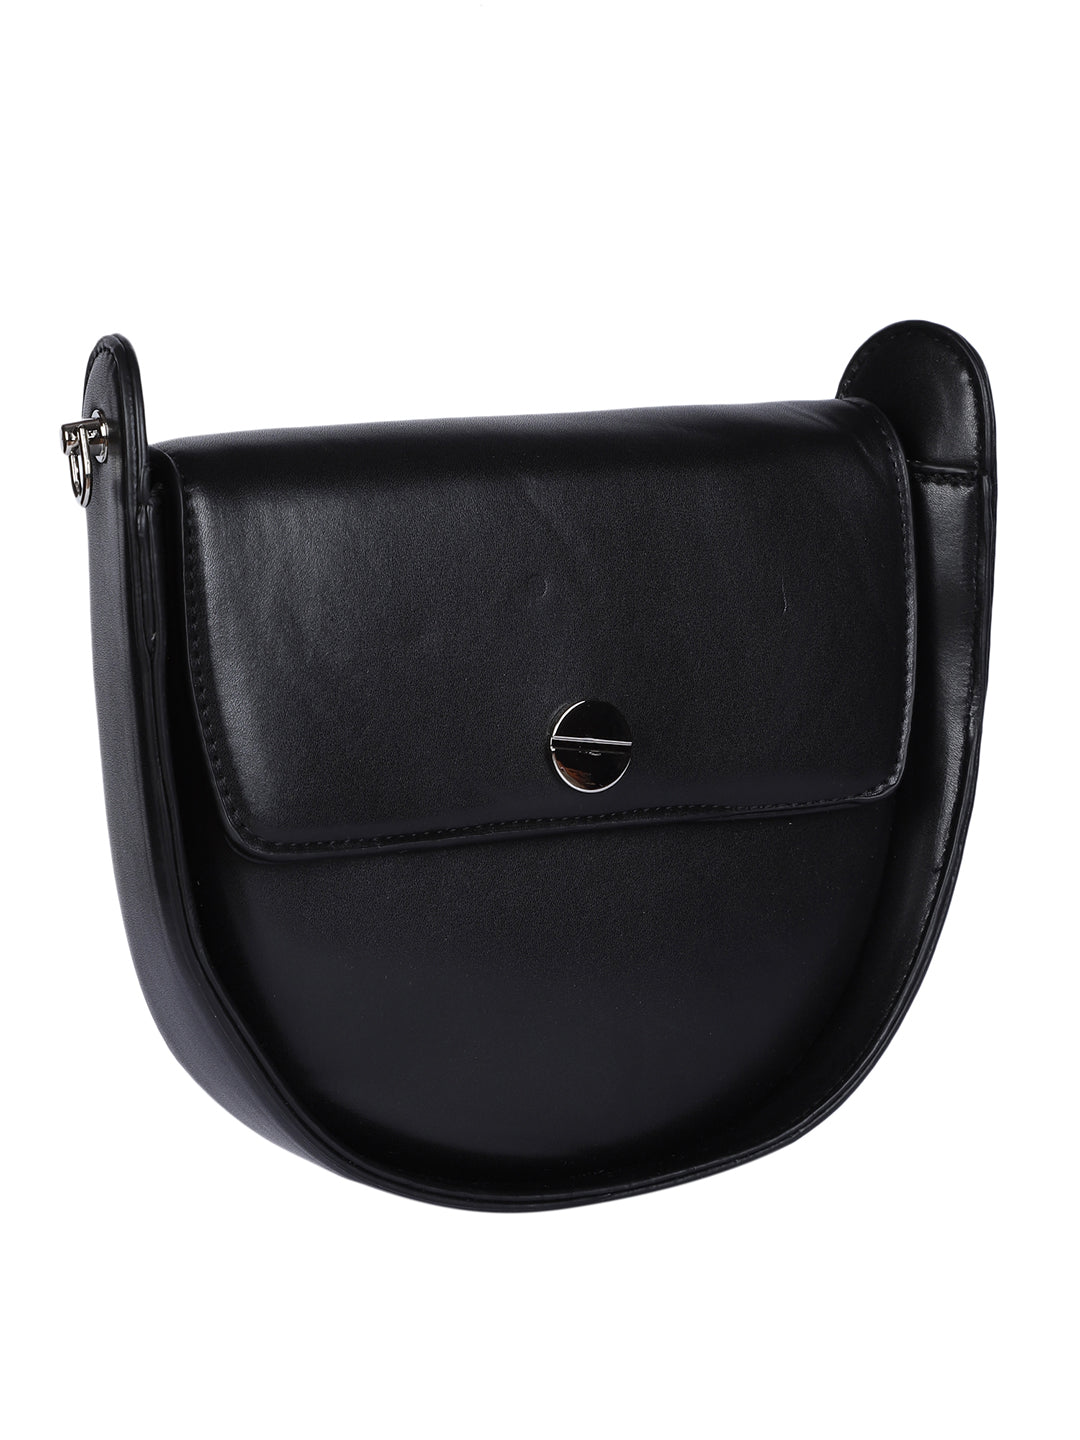 MINI WESST Women's Black Handheld Bag